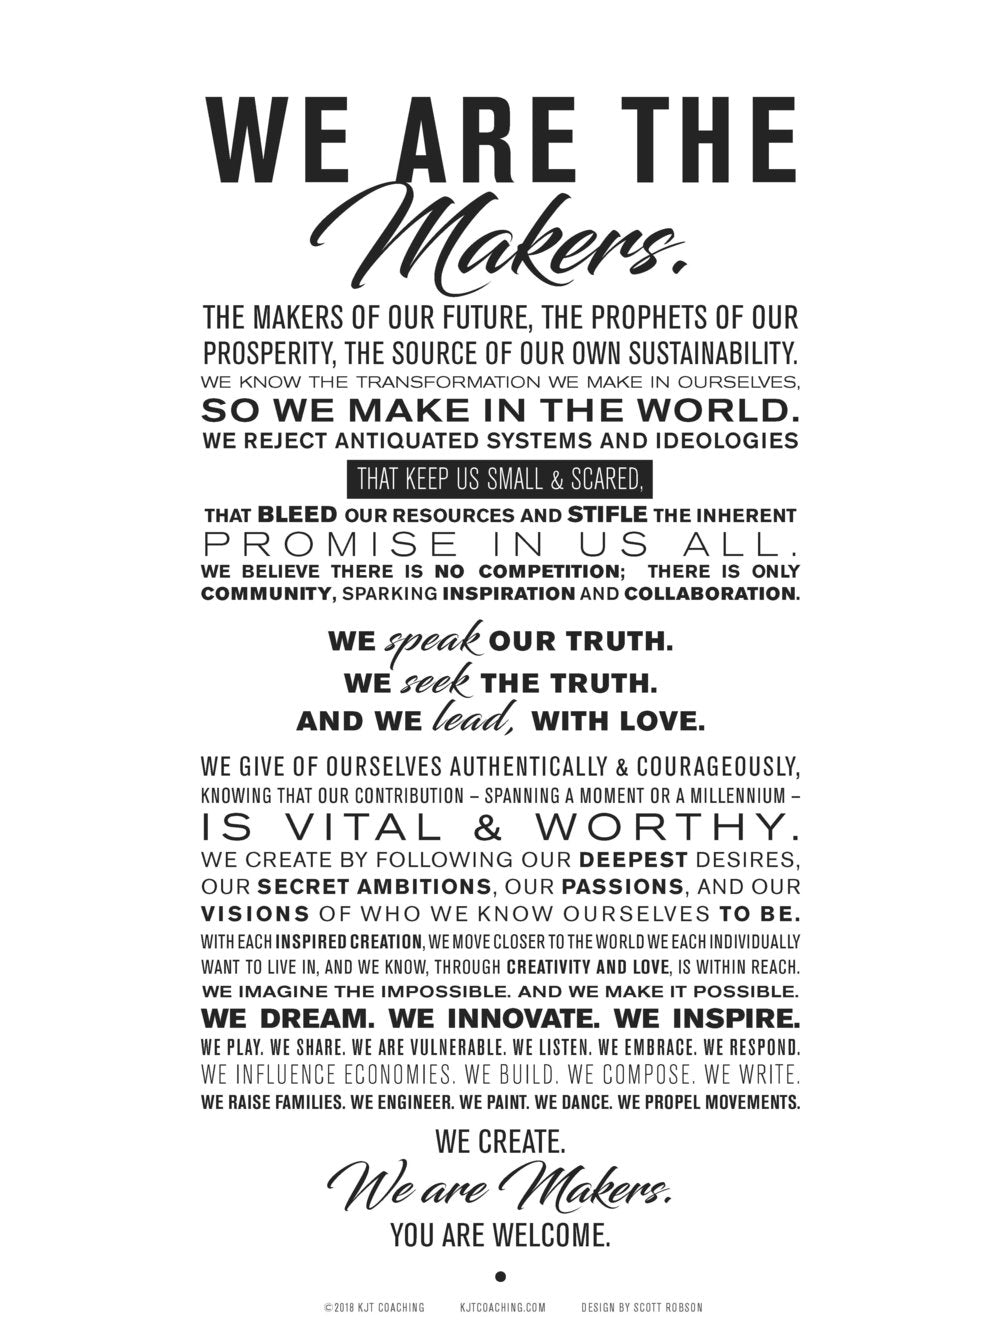 The Makers Manifesto